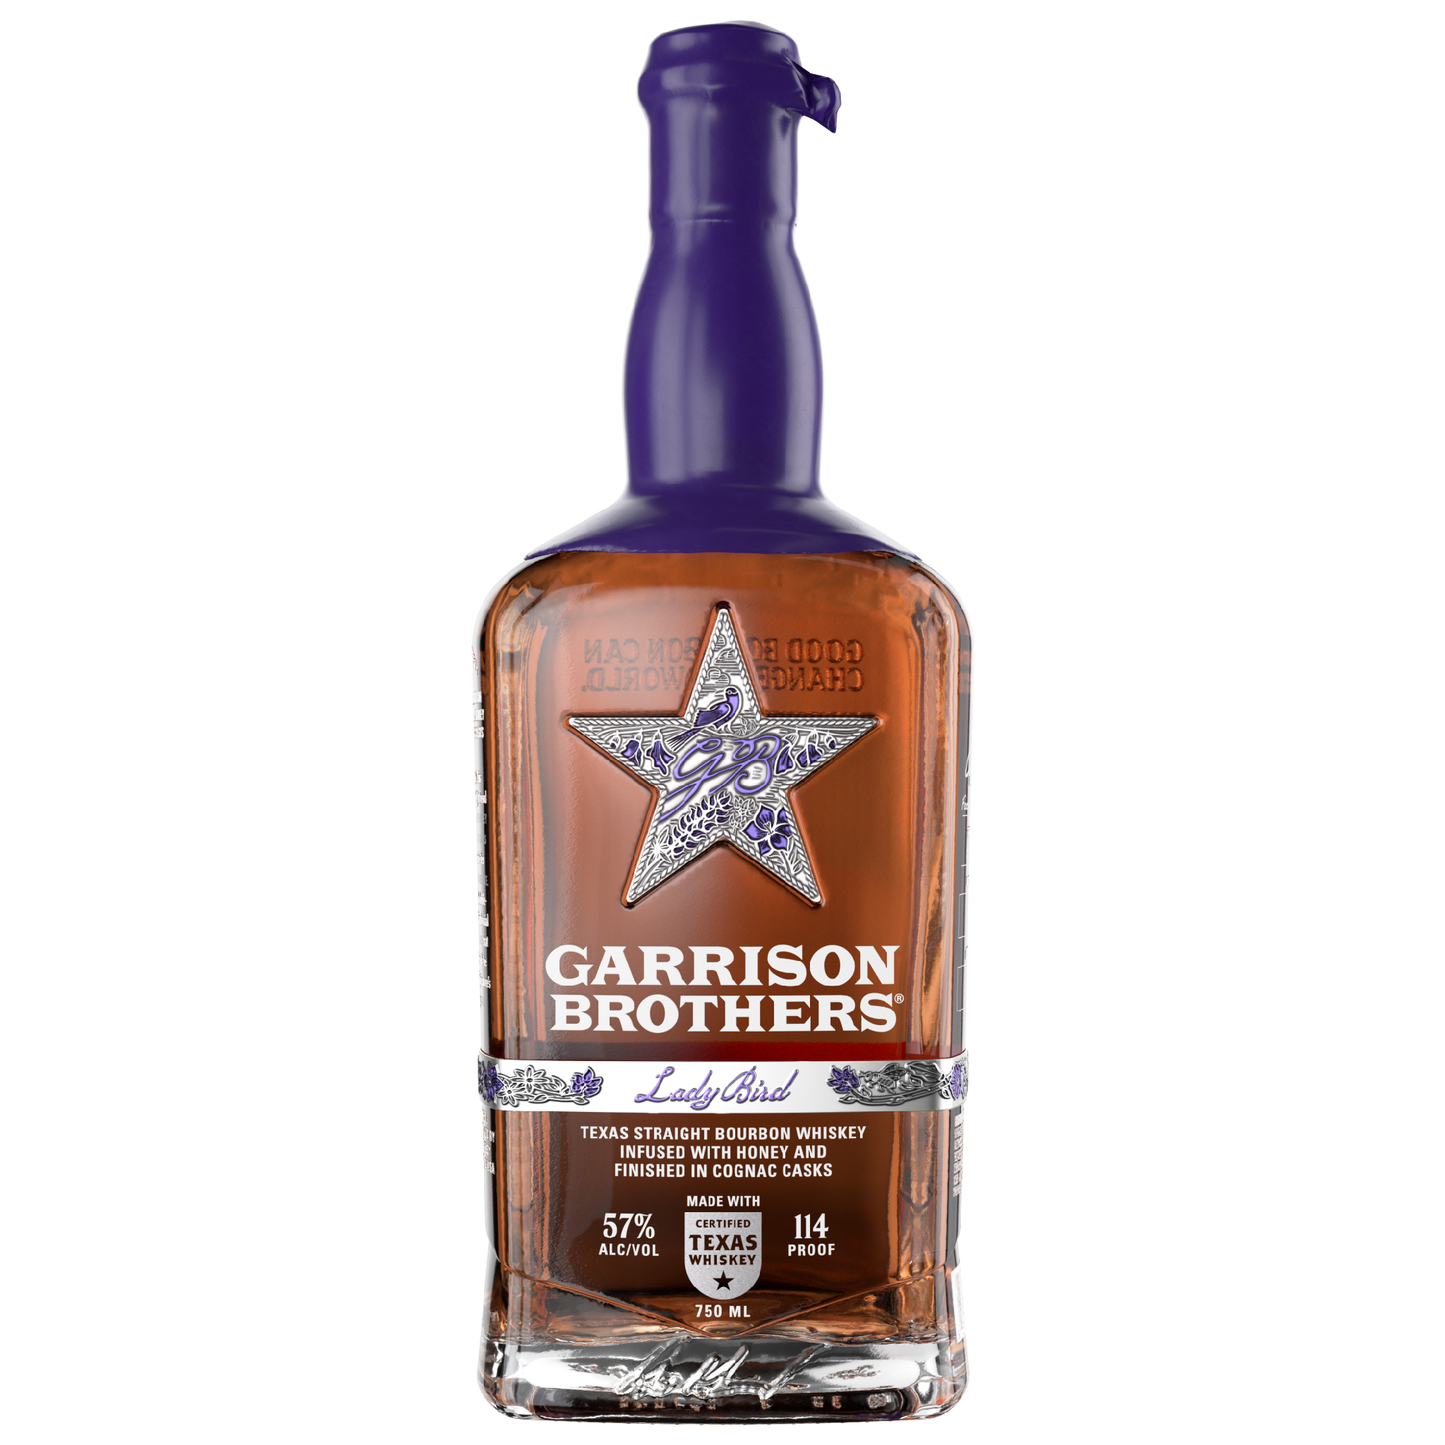 Garrison Bros Ladybrd Bourbon Wsk - Liquor Geeks